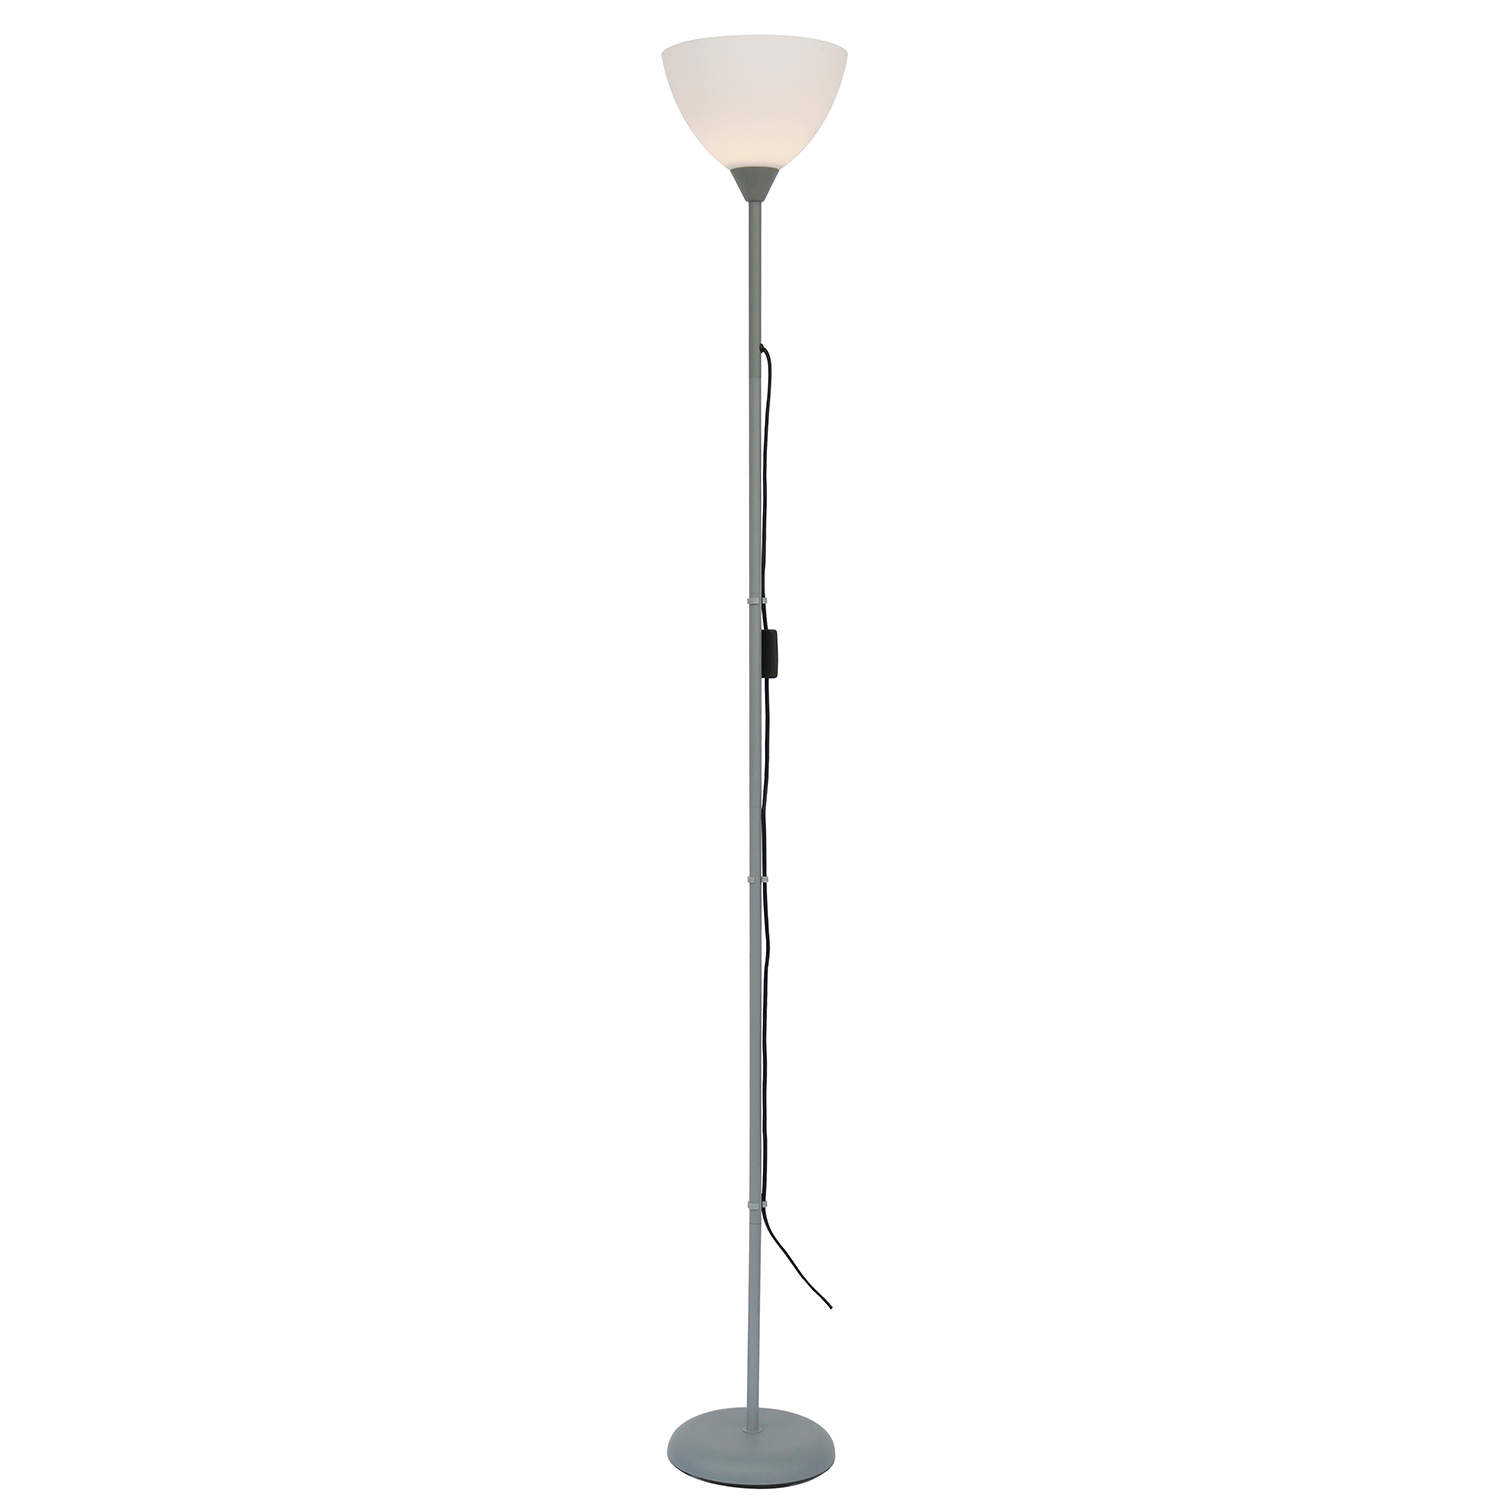 Hot sale one pole floor lamp